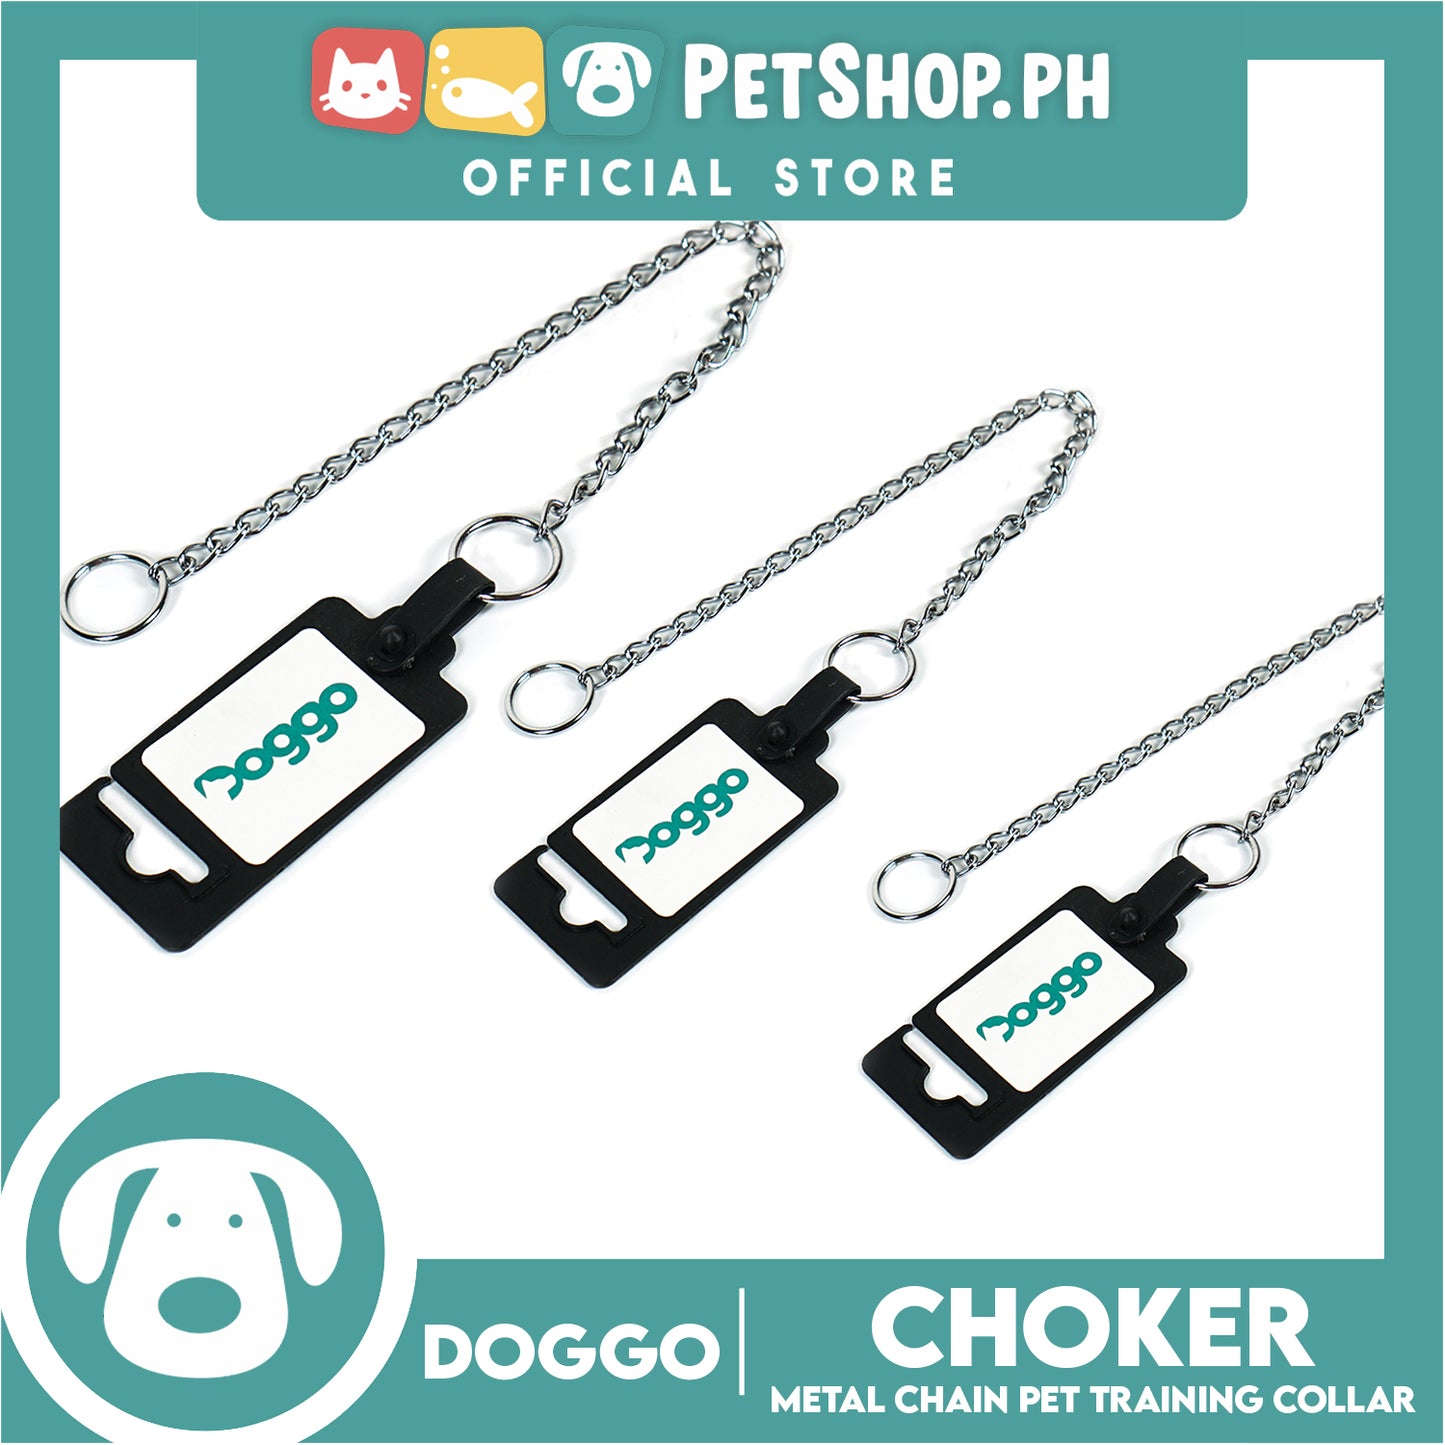 Doggo Choker (Large) Stainless Steel Metal Choker for Your Dog